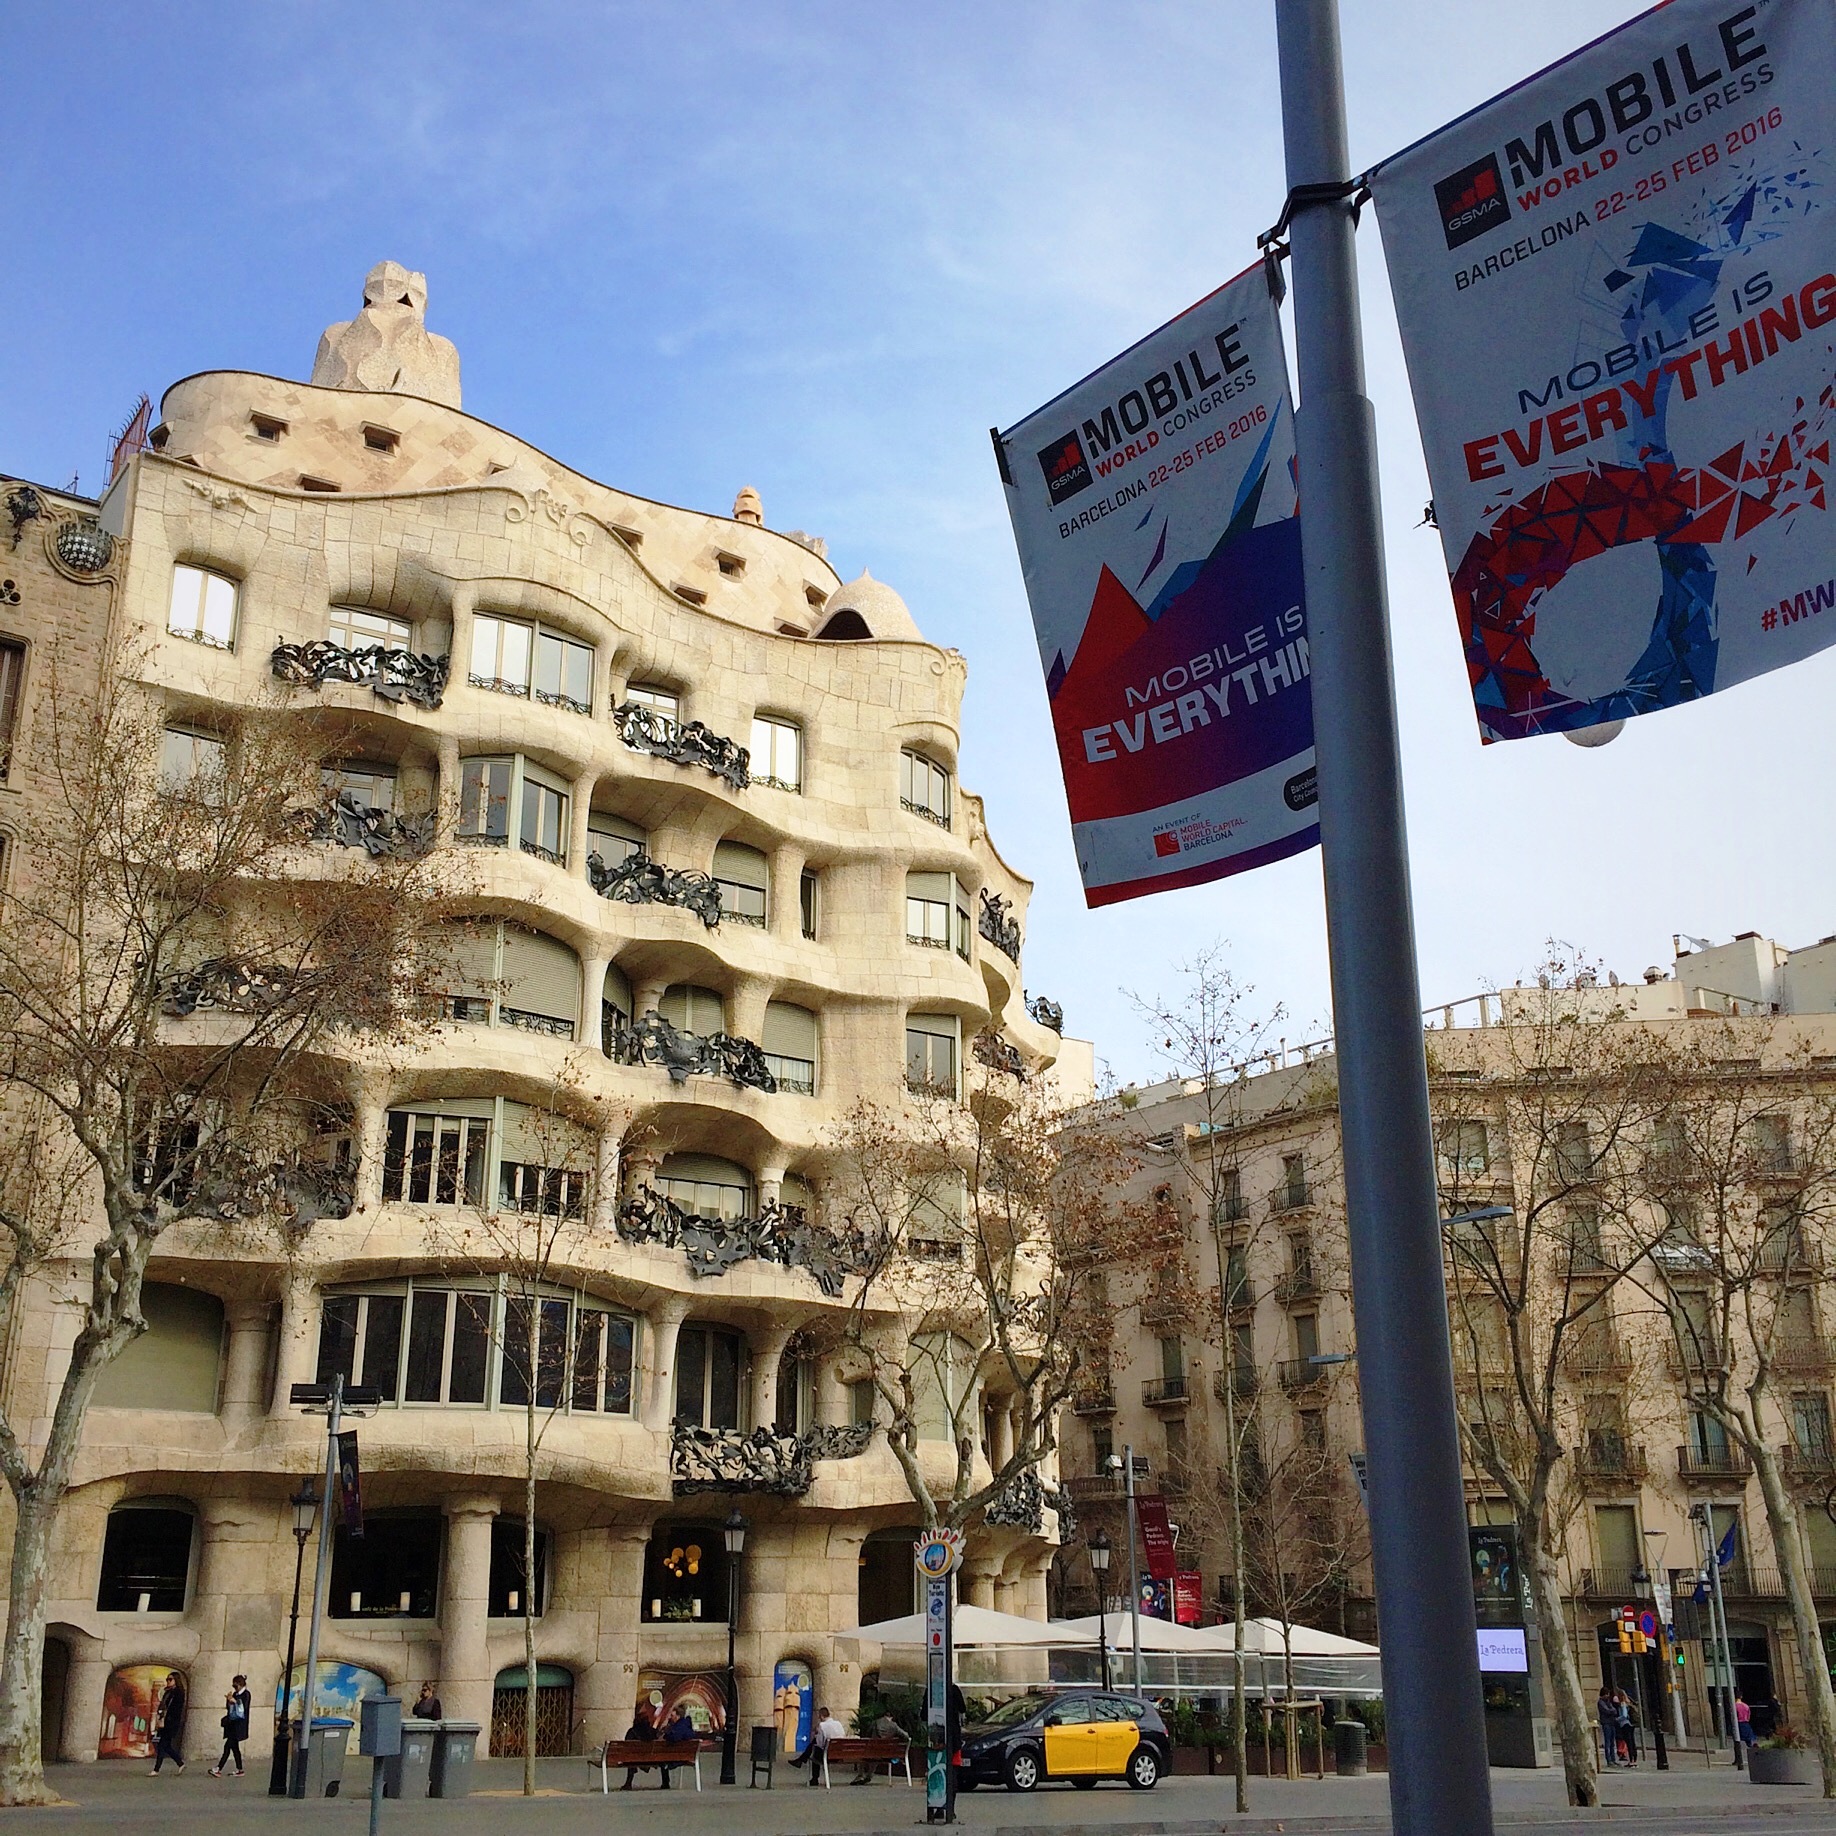 Mobile World Congress invades Barcelona each March